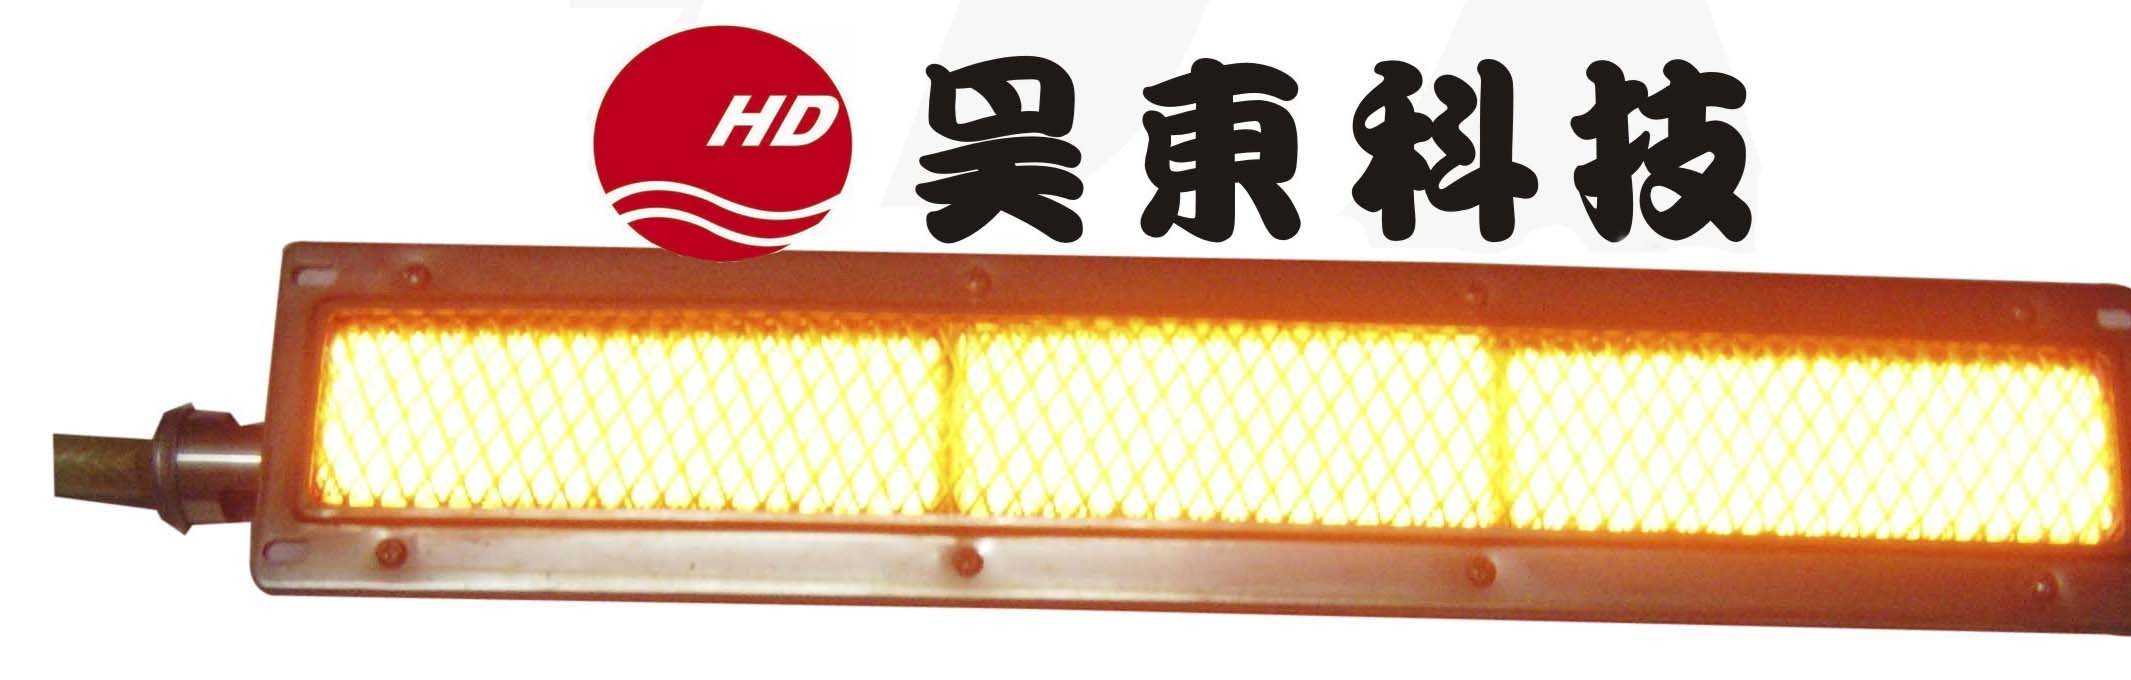 Ceramic Infrared BBQ Burner HD538